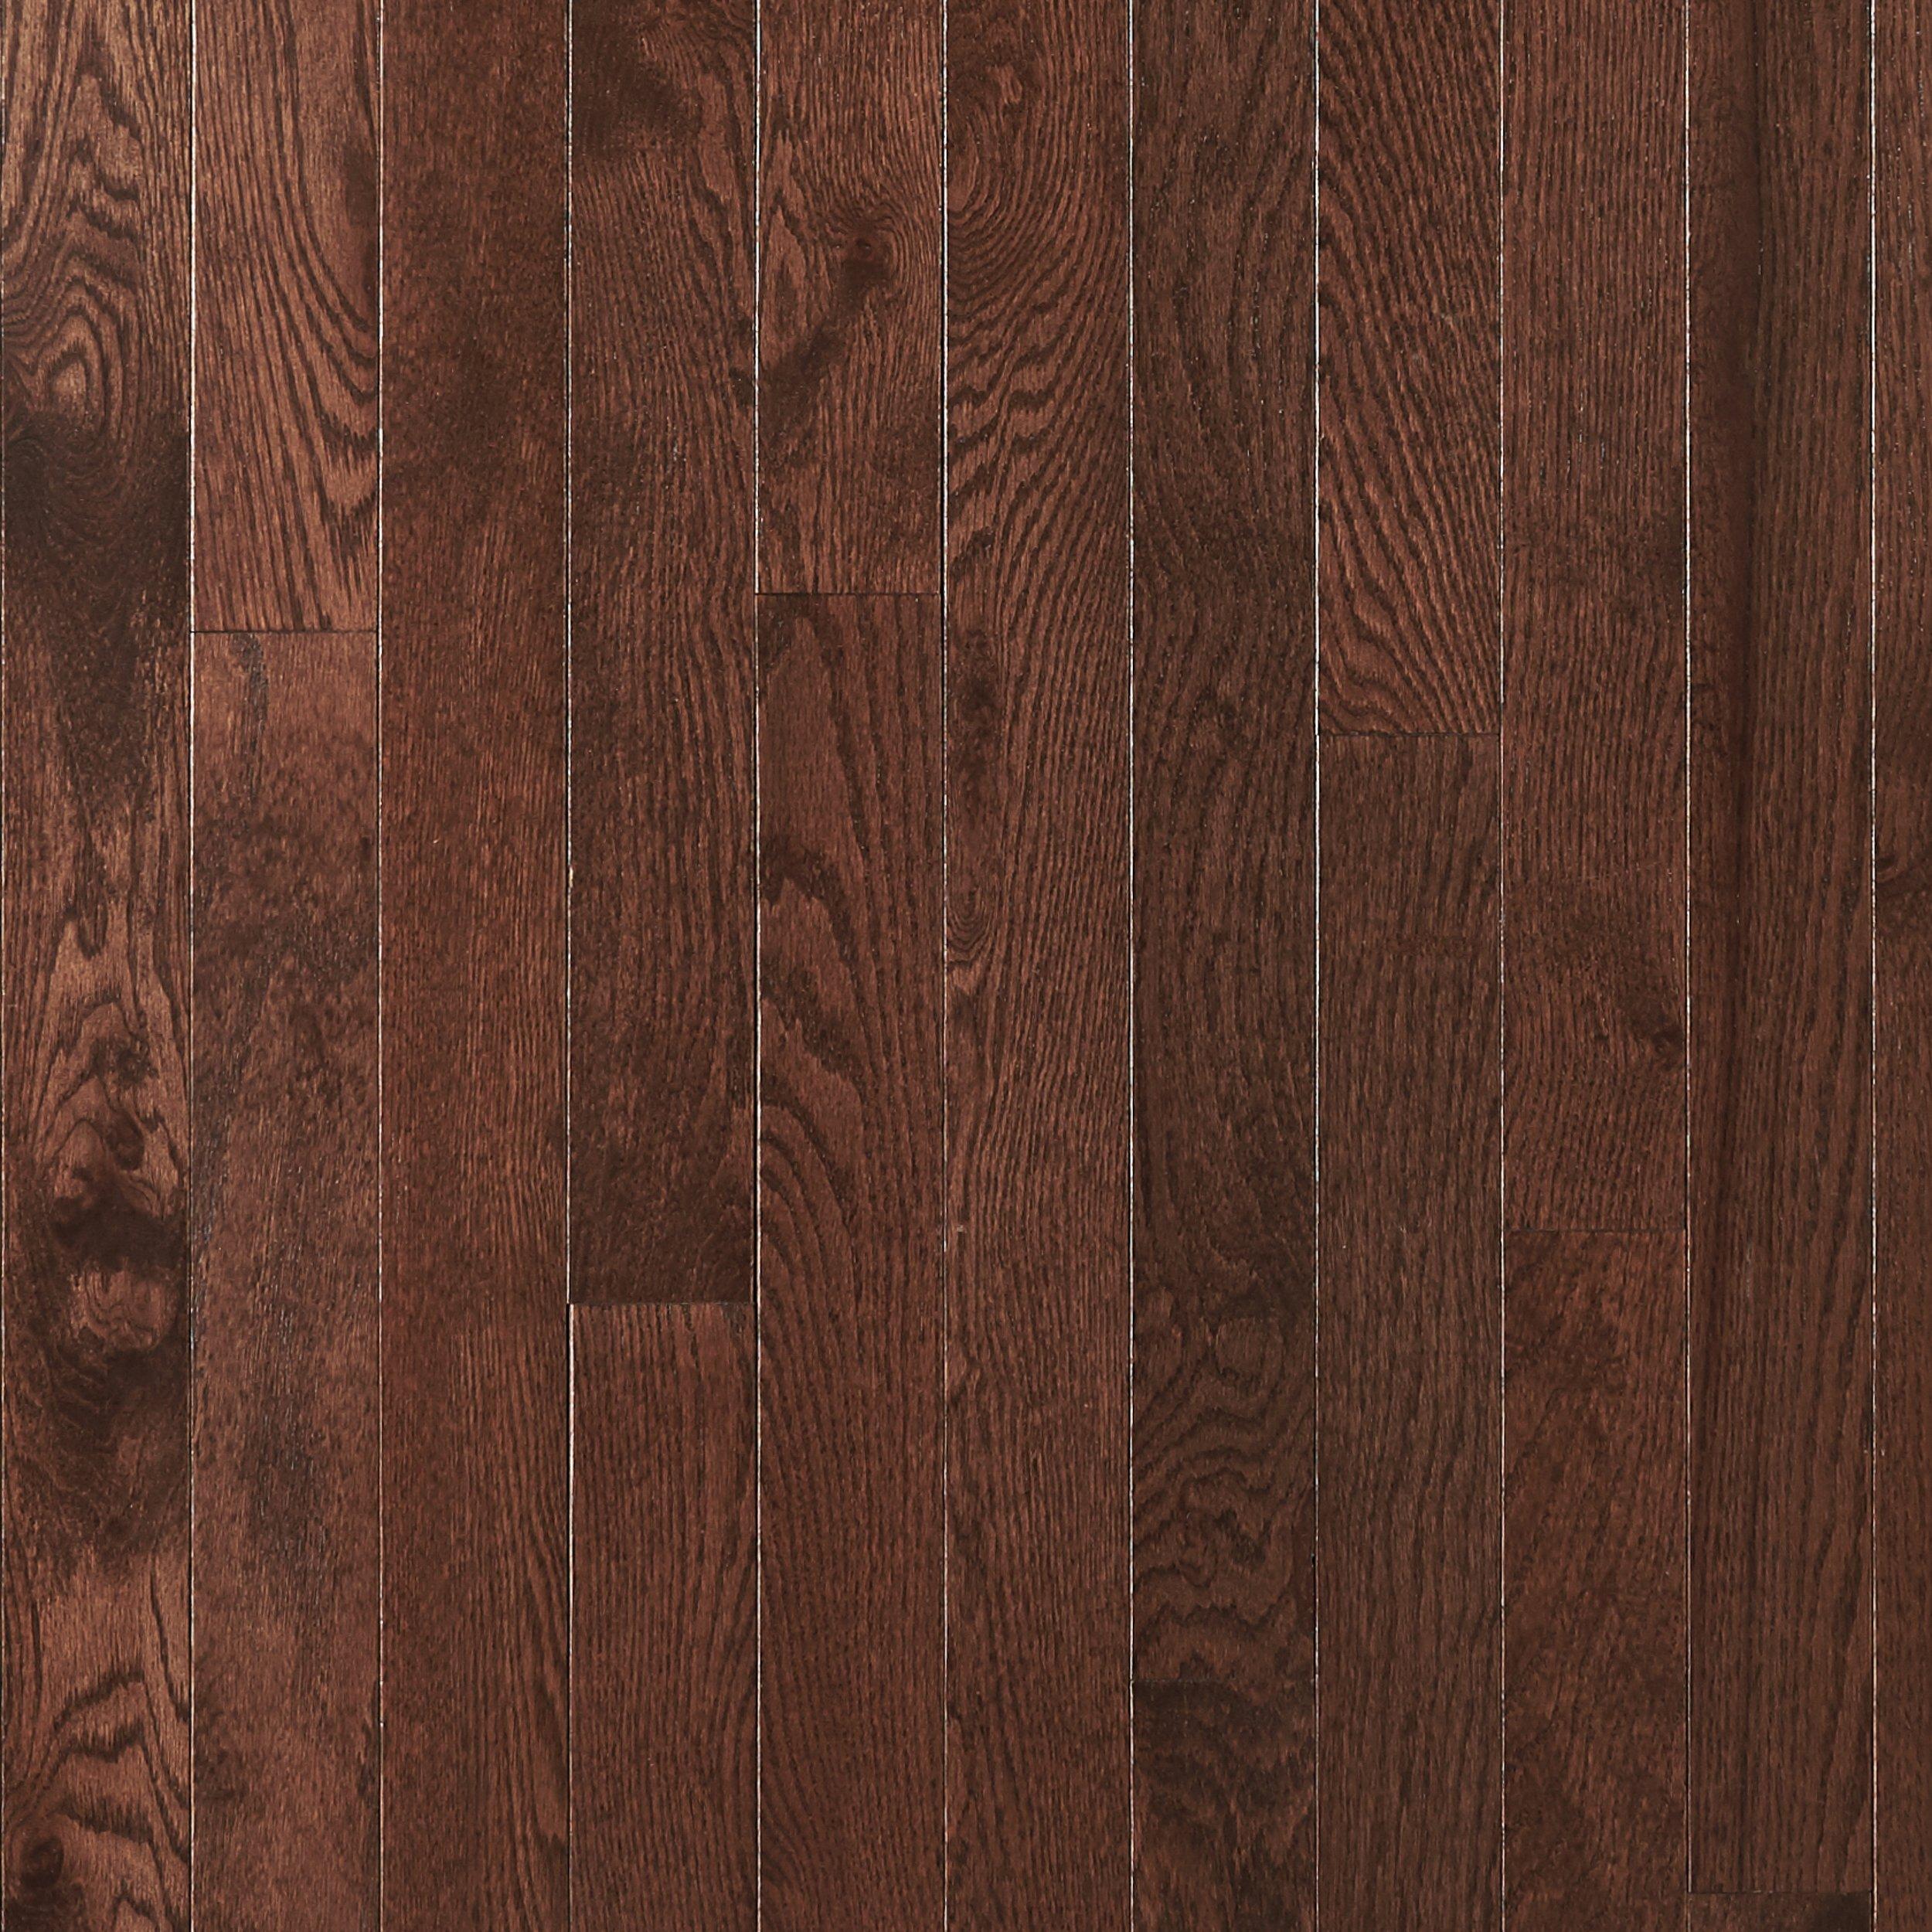 Dark Mocha Oak Smooth Solid Hardwood, 15 Lb Black Felt Hardwood Flooring Underlayment Paper